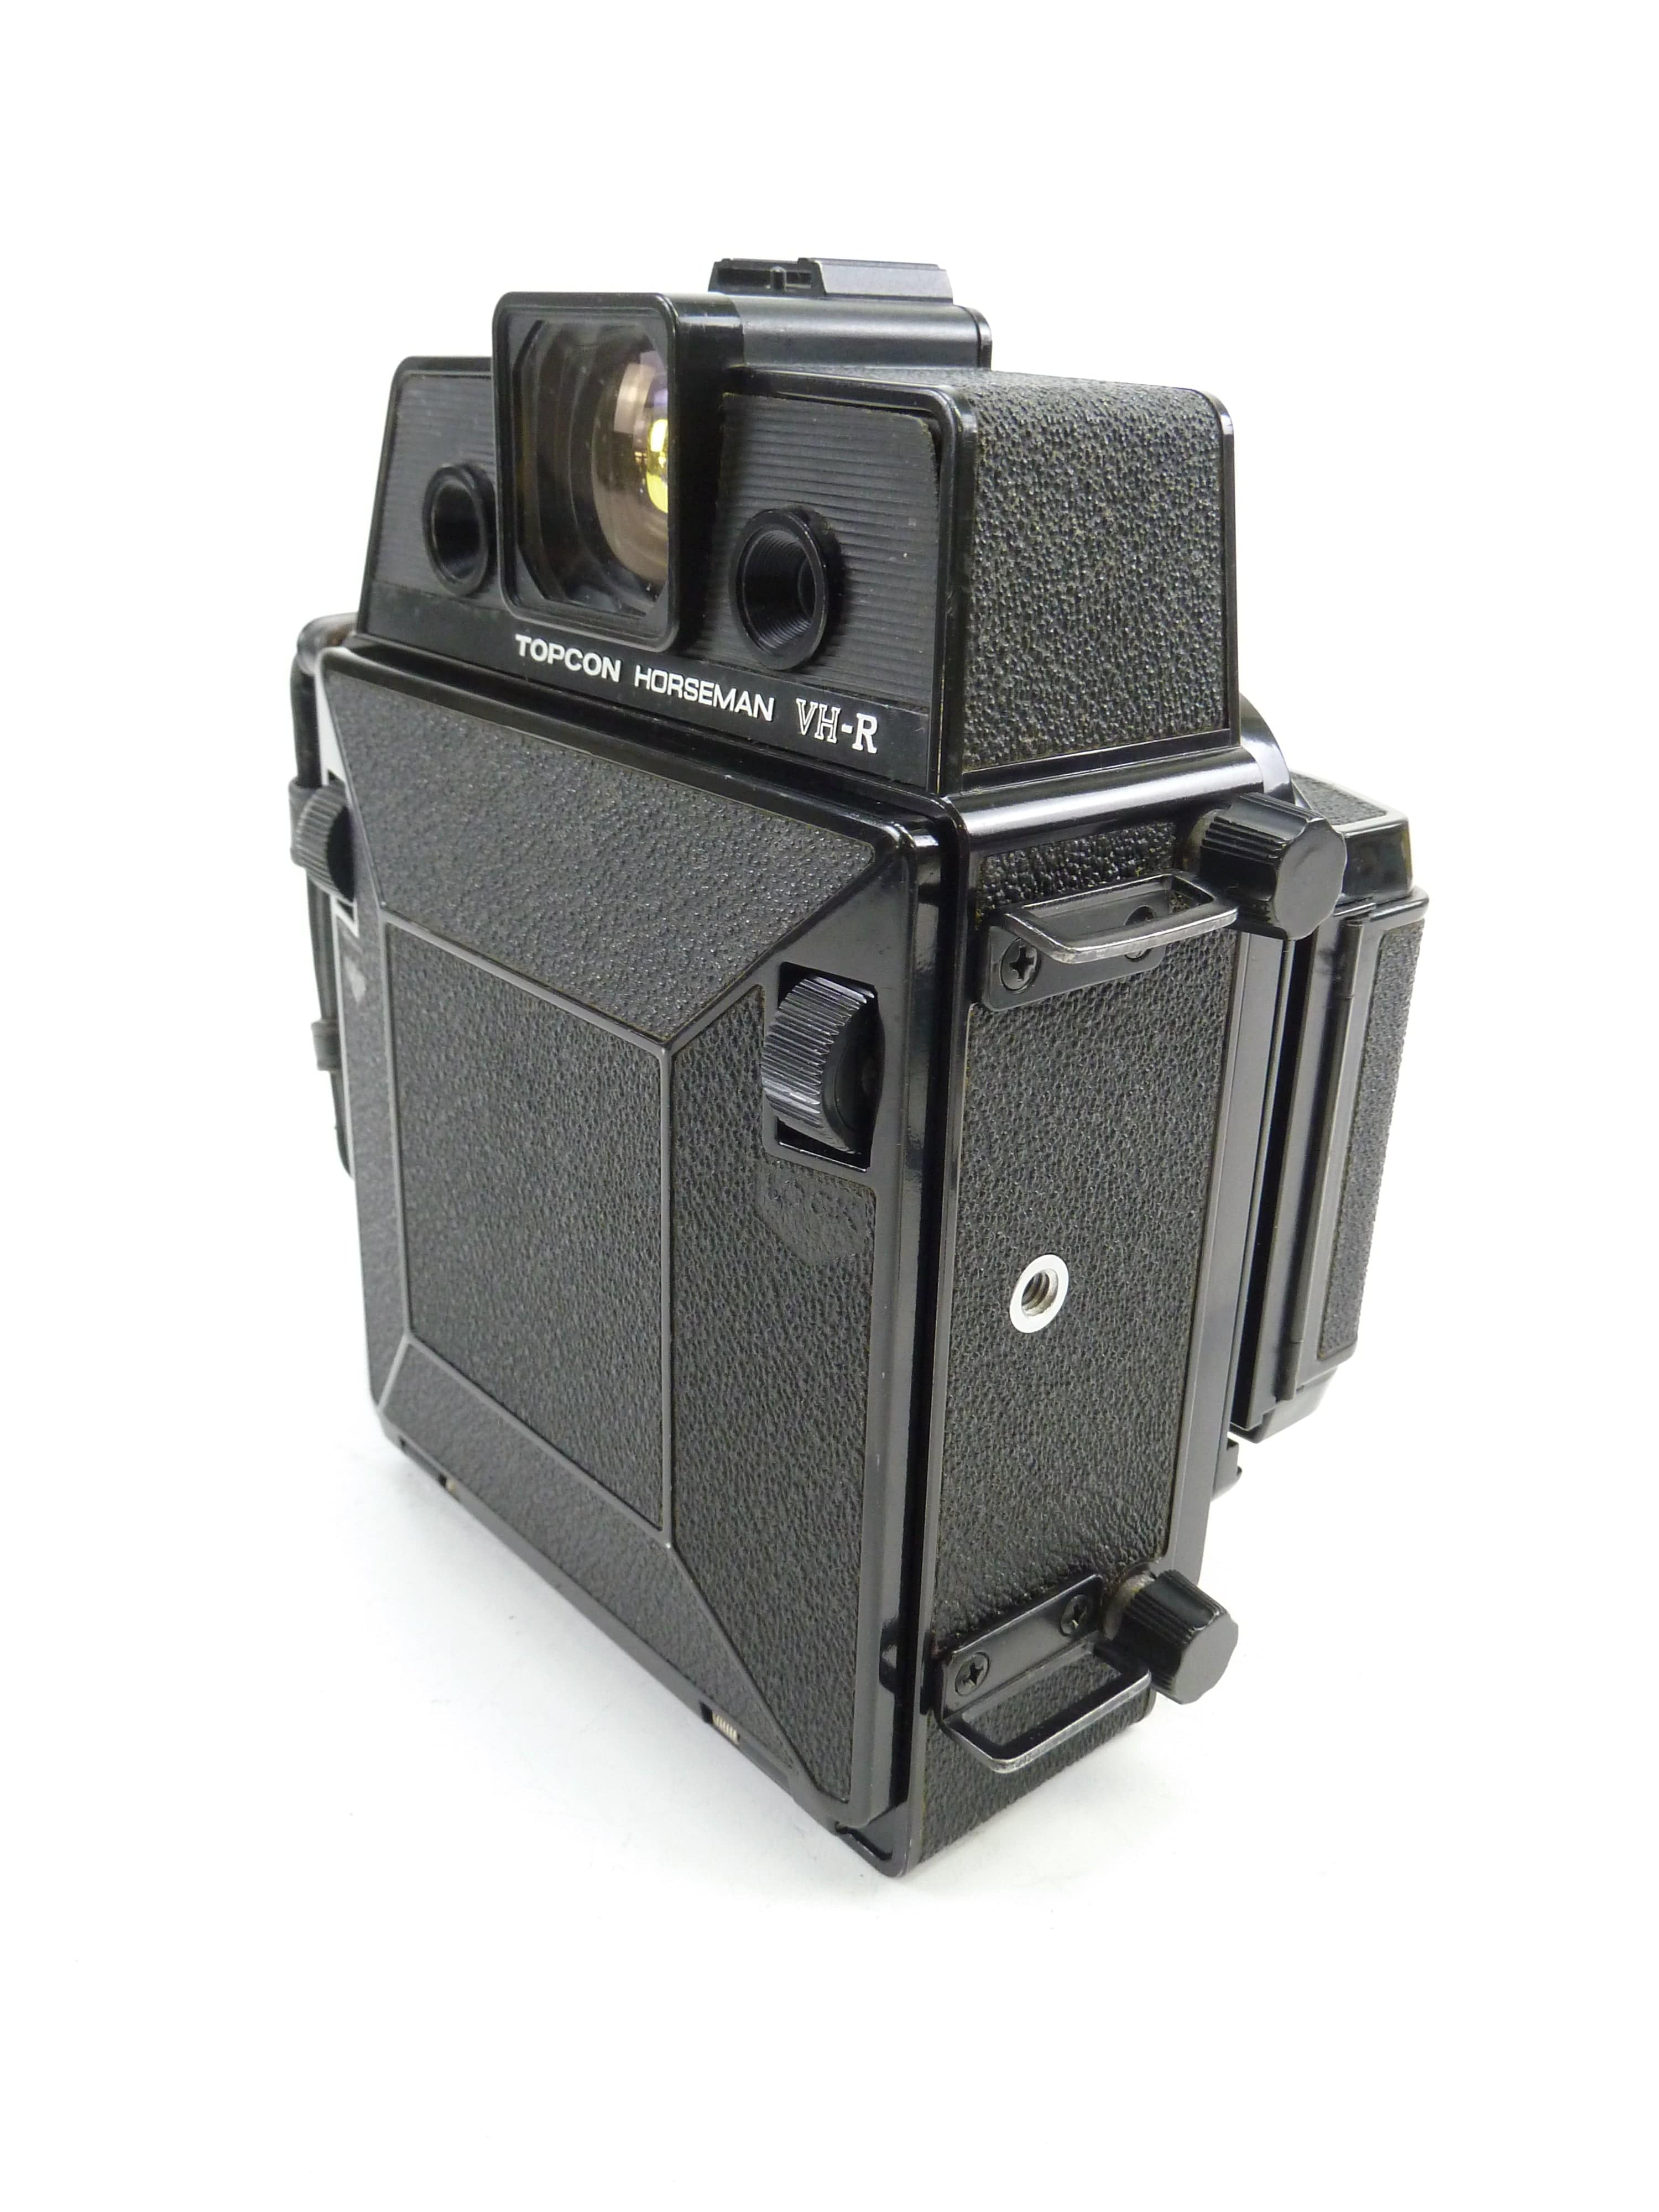 Horseman VH-4 6X9 Field Camera with Super Topcor 90MM F5.6 Lens